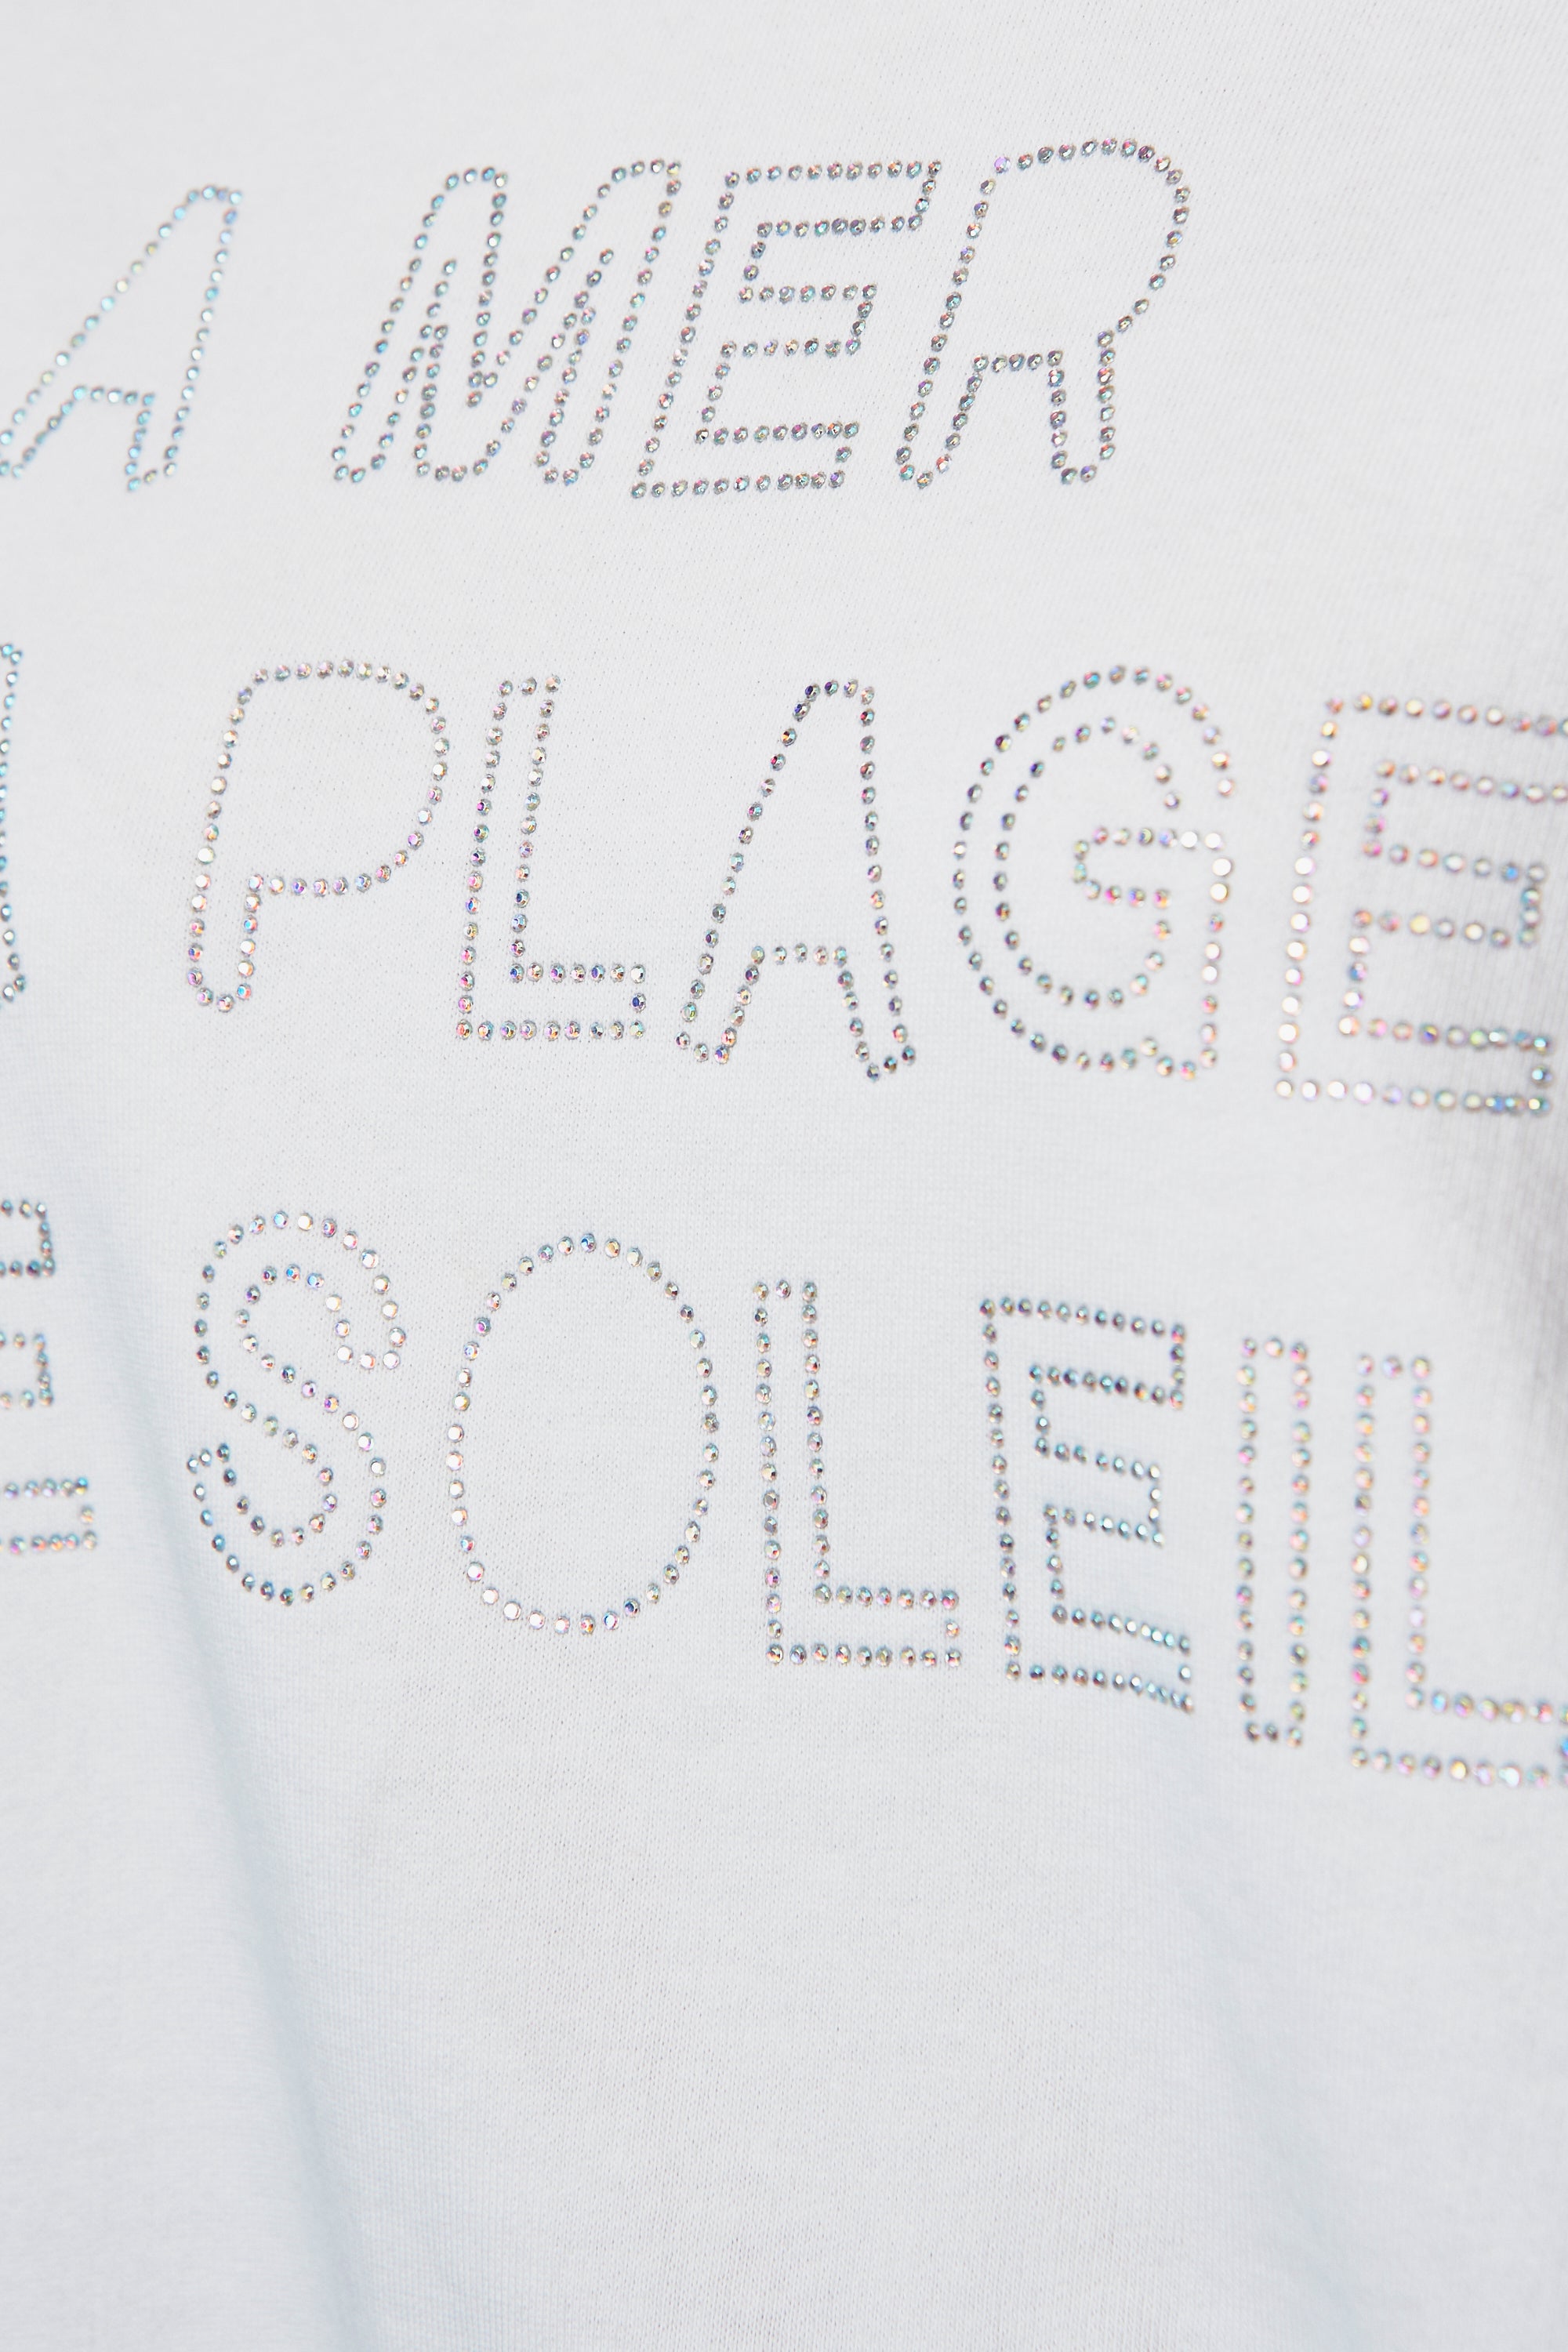 LA MER, LA PLAGE, LE SOLEIL Sweatshirt - Weiß/ Strass